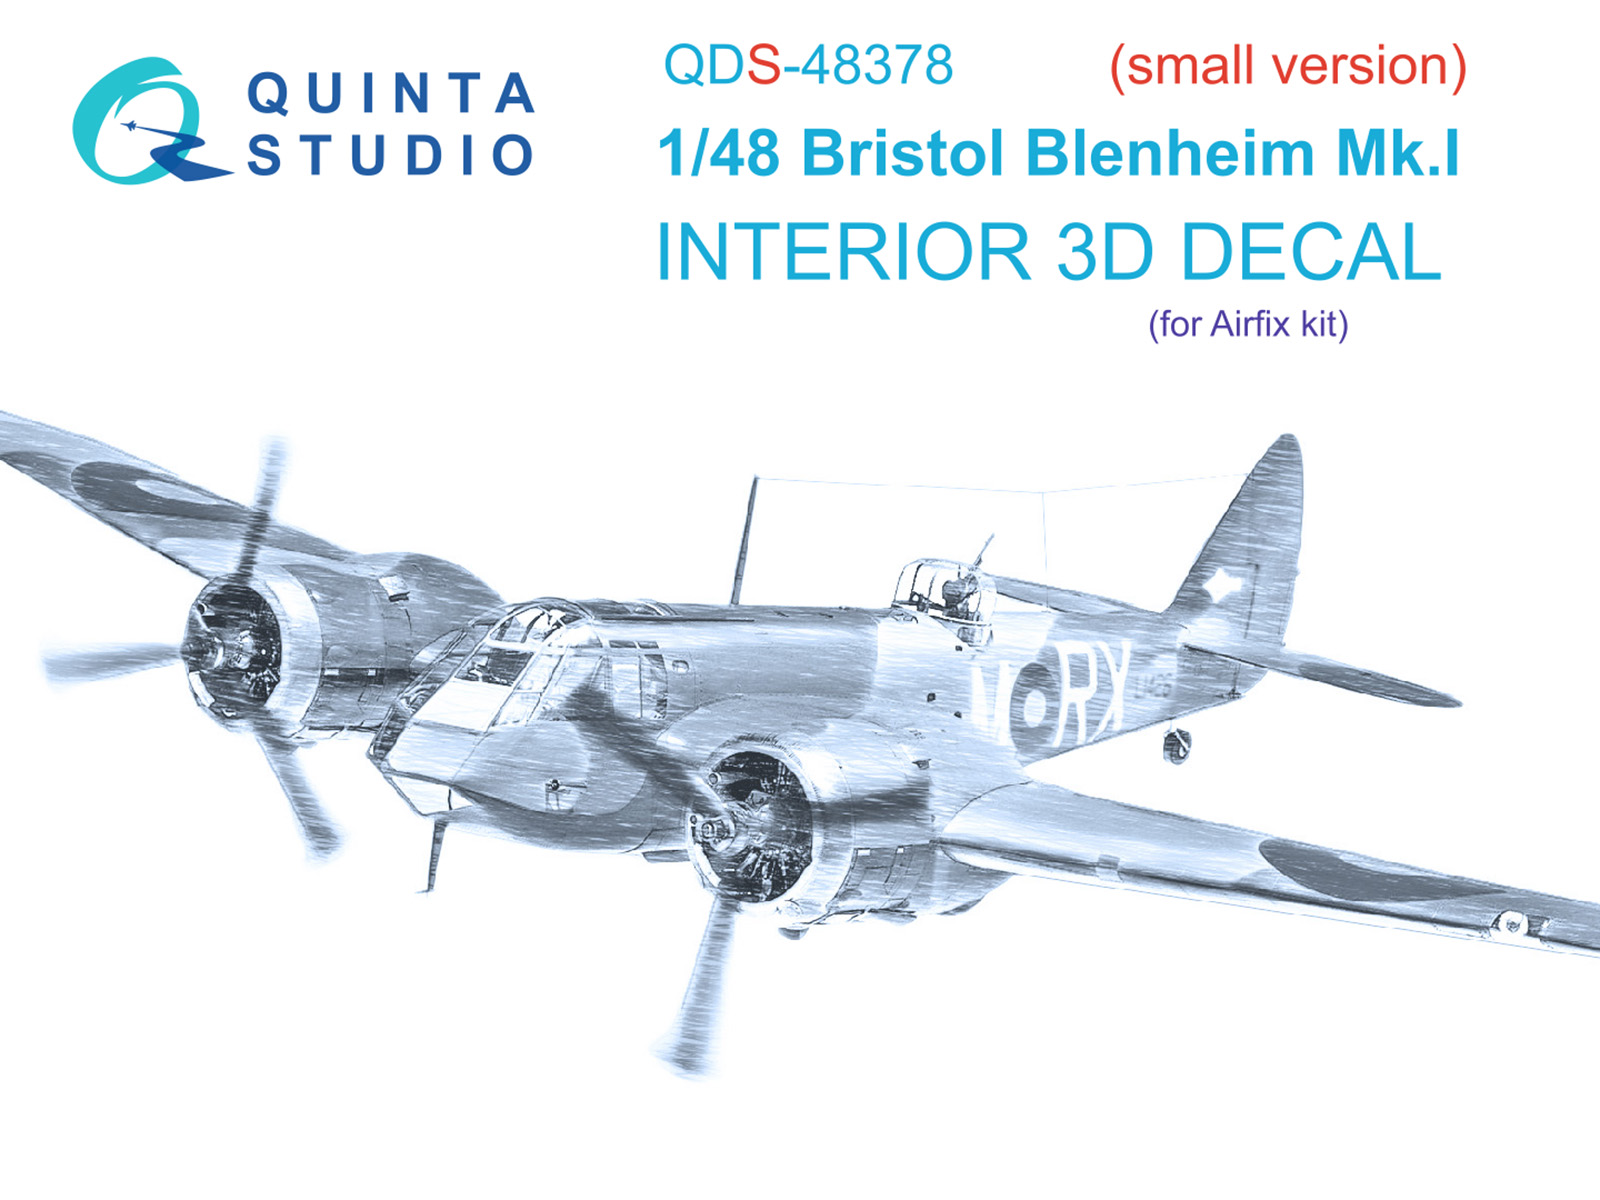 3D Декаль интерьера Quinta Studio 1/48 кабины Bristol Blenheim Mk I Airfix QDS-48378